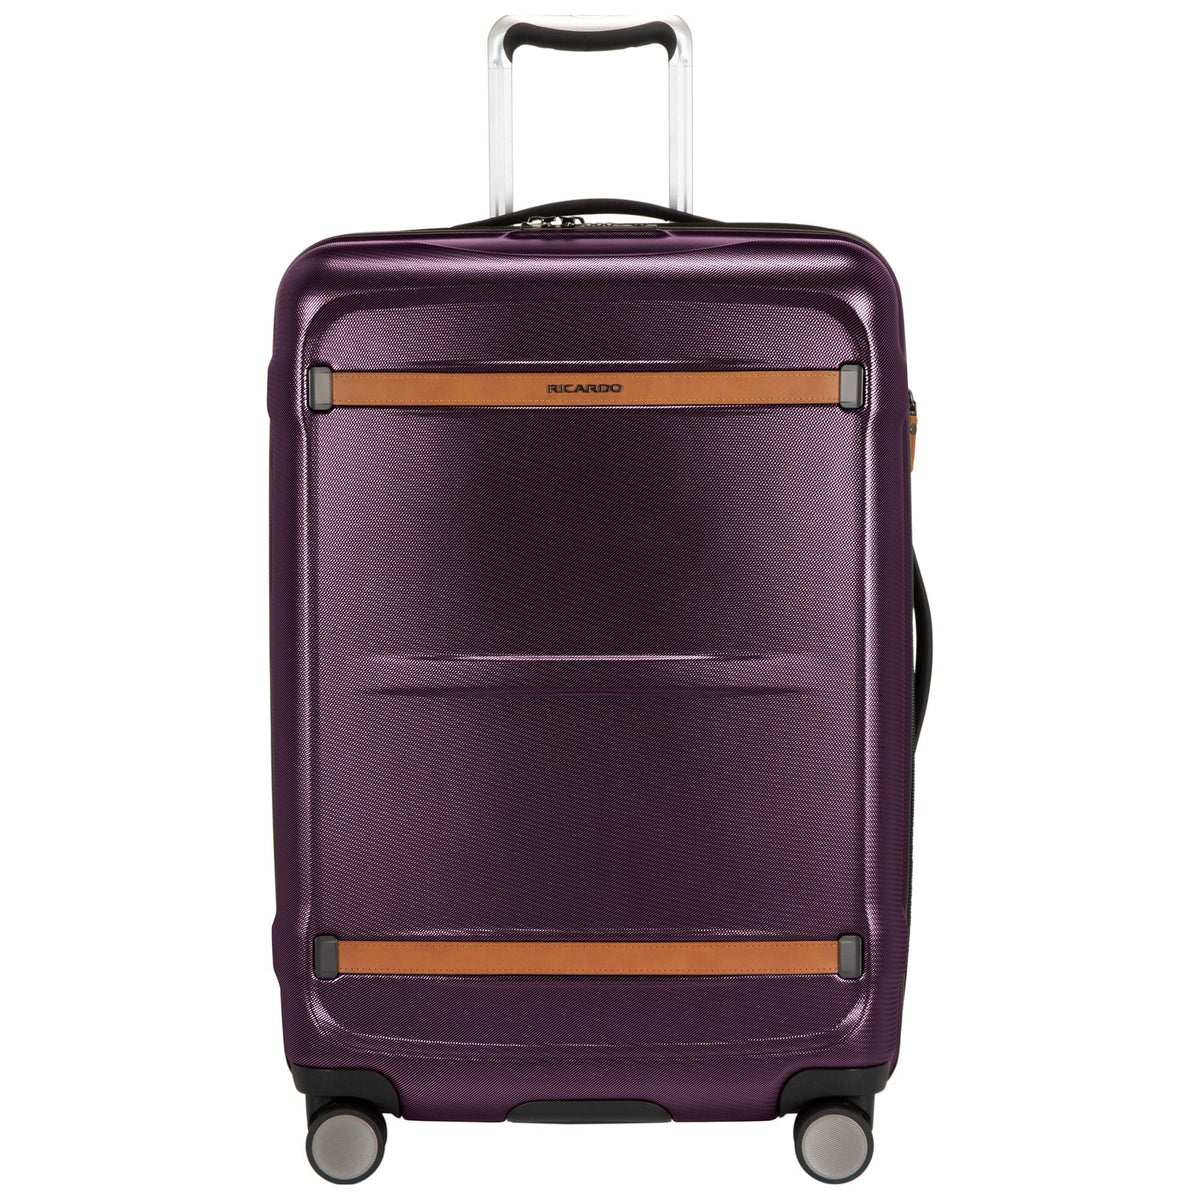 Ricardo Beverly Hills Montecito Hardside Medium Check-In Luggage